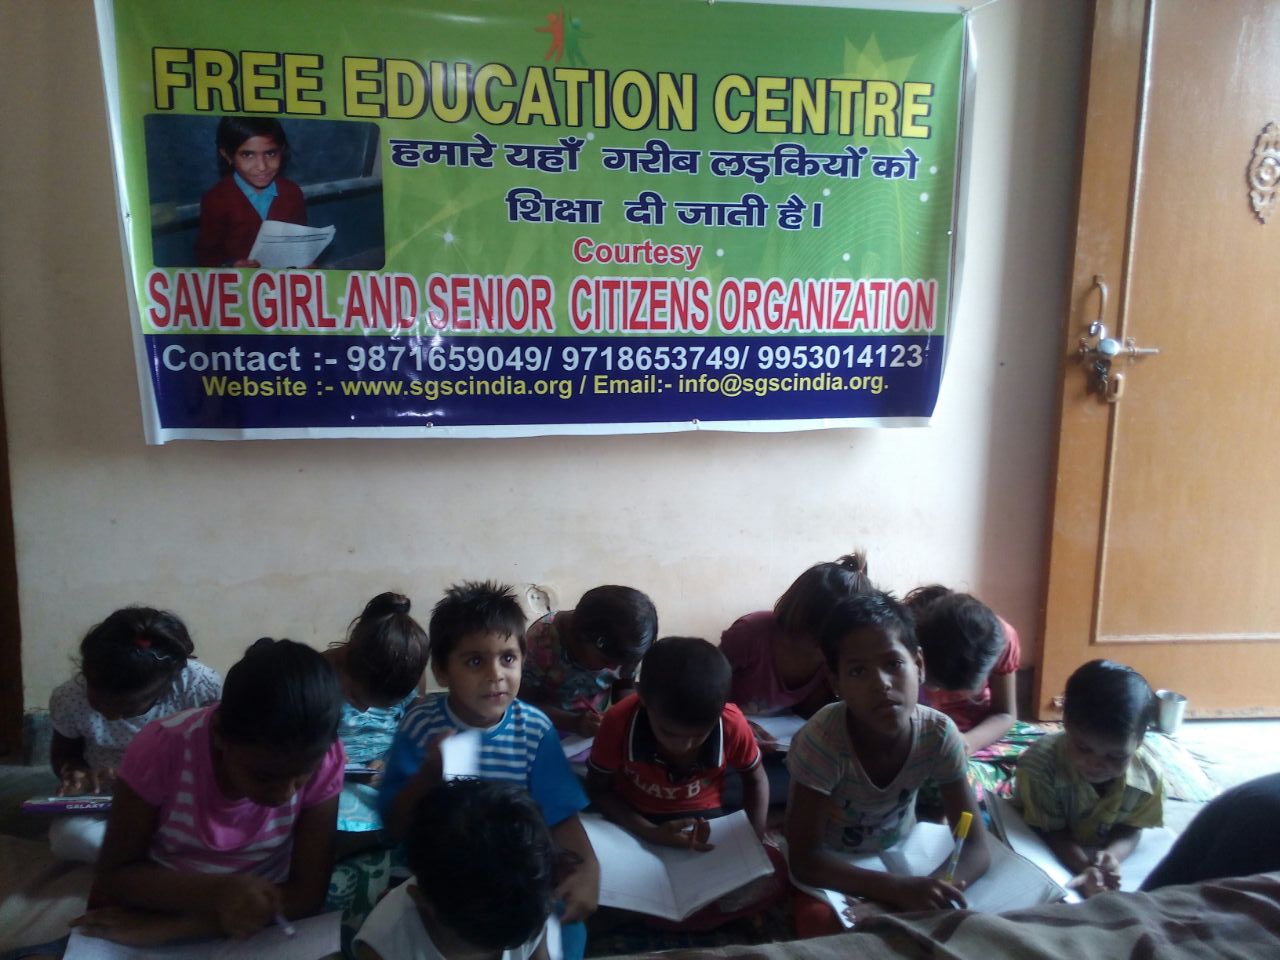 Free Education Centre